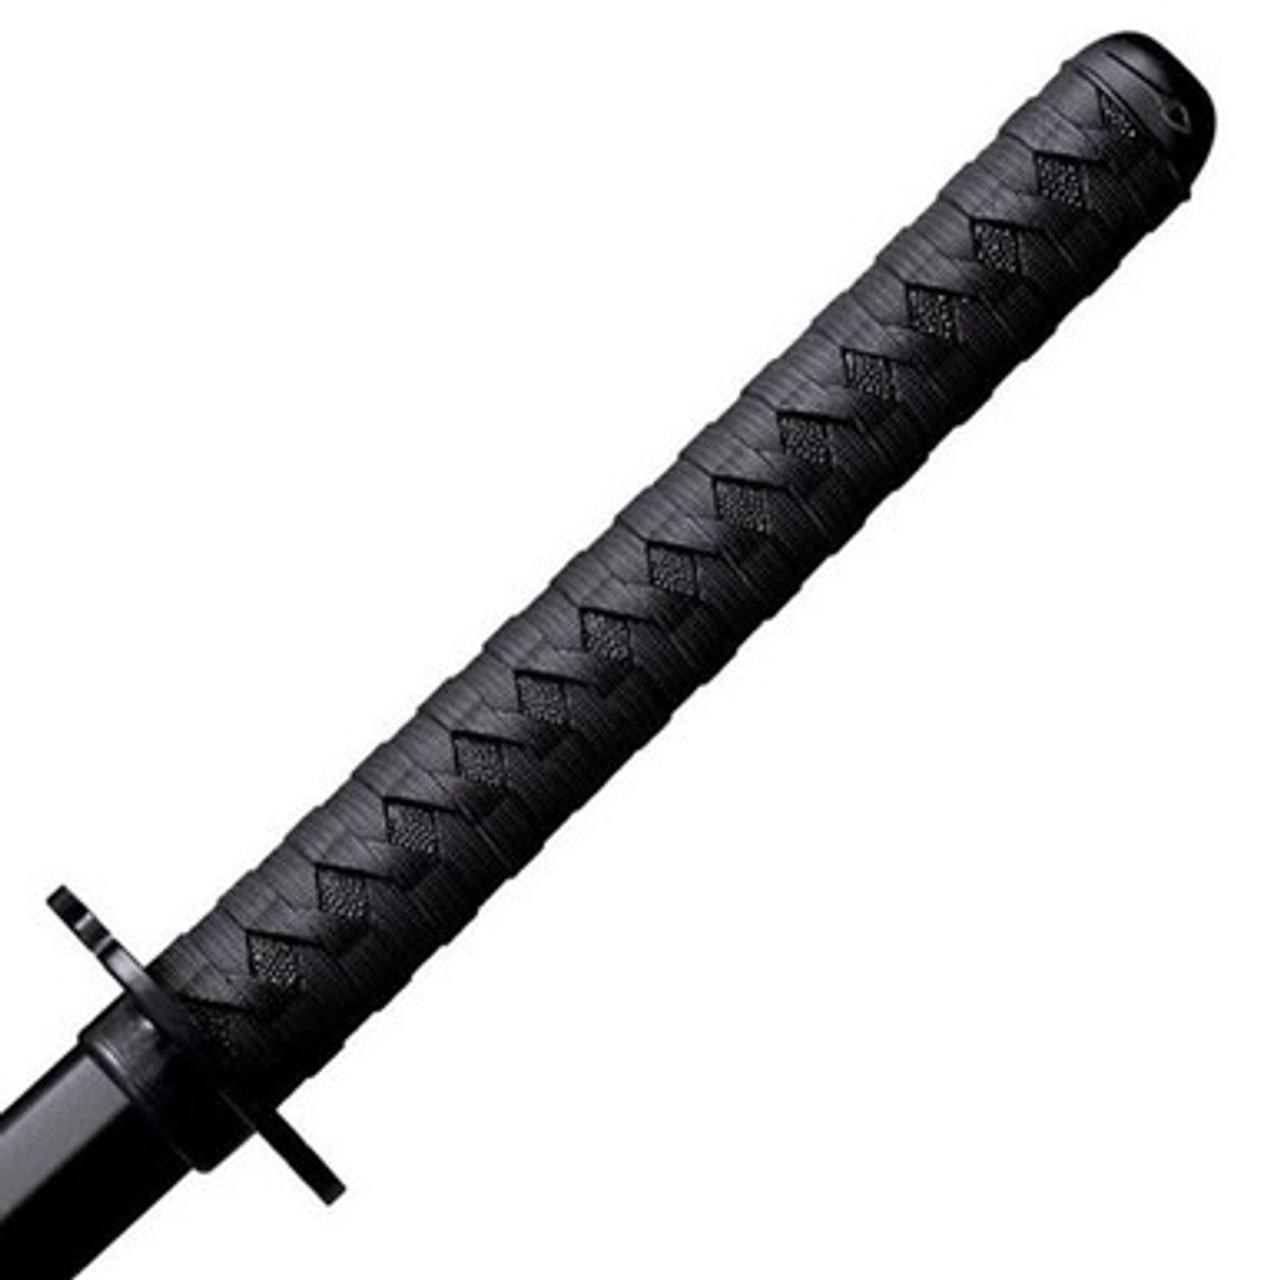 Samurai Katanas Japanese Swords and Sabers for Training and Decoration